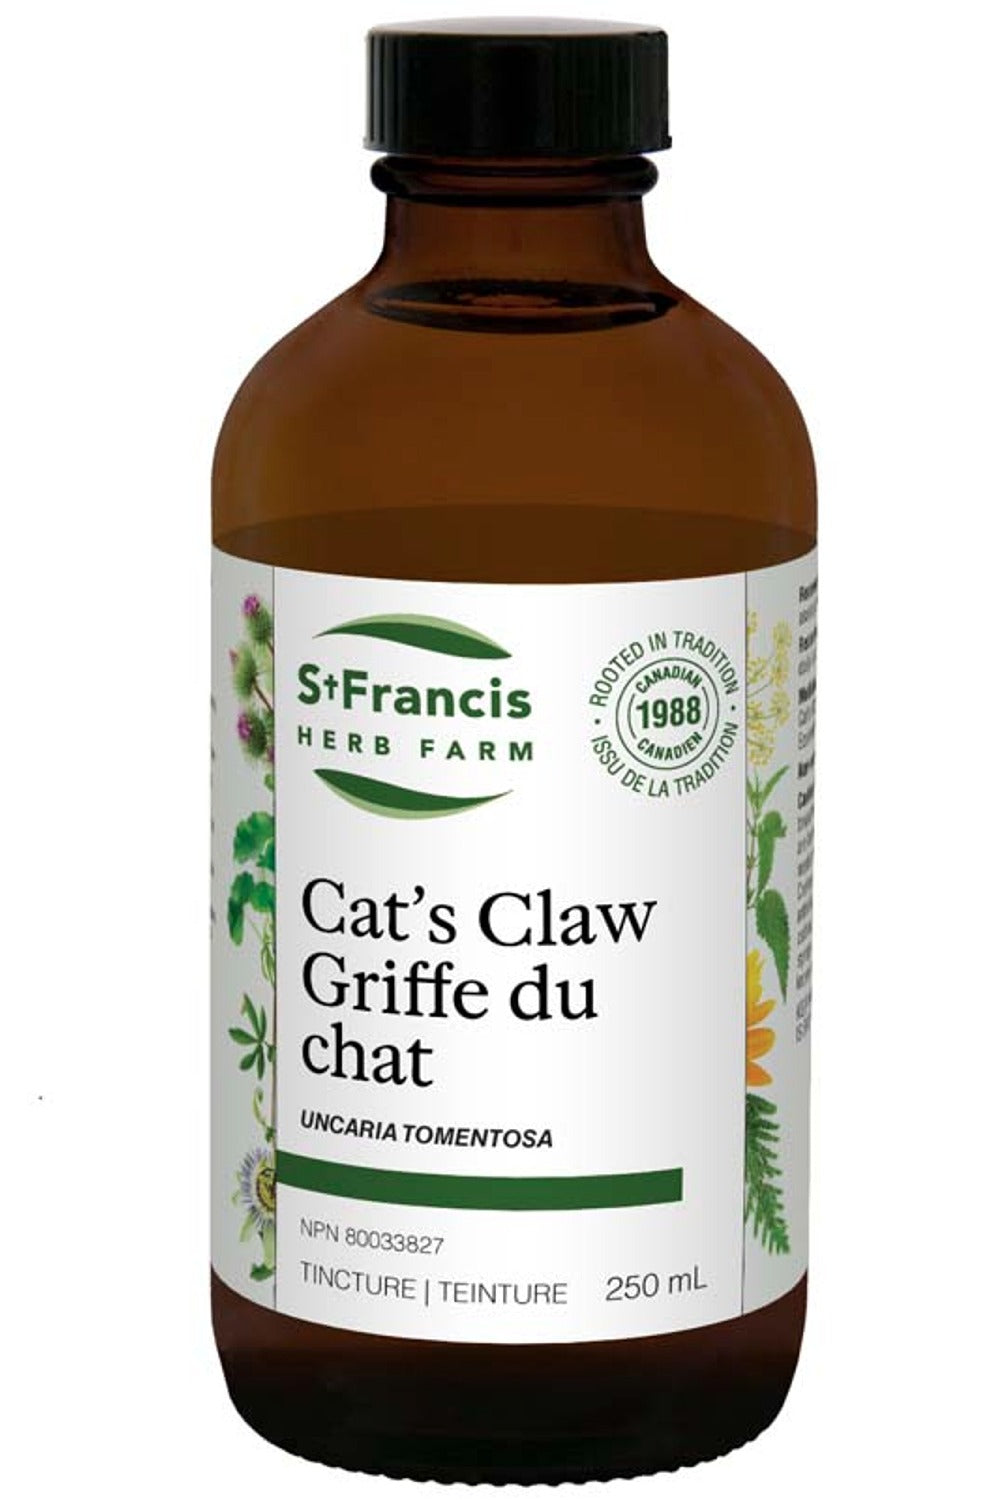 ST FRANCIS HERB FARM Cat's Claw (250 ml)